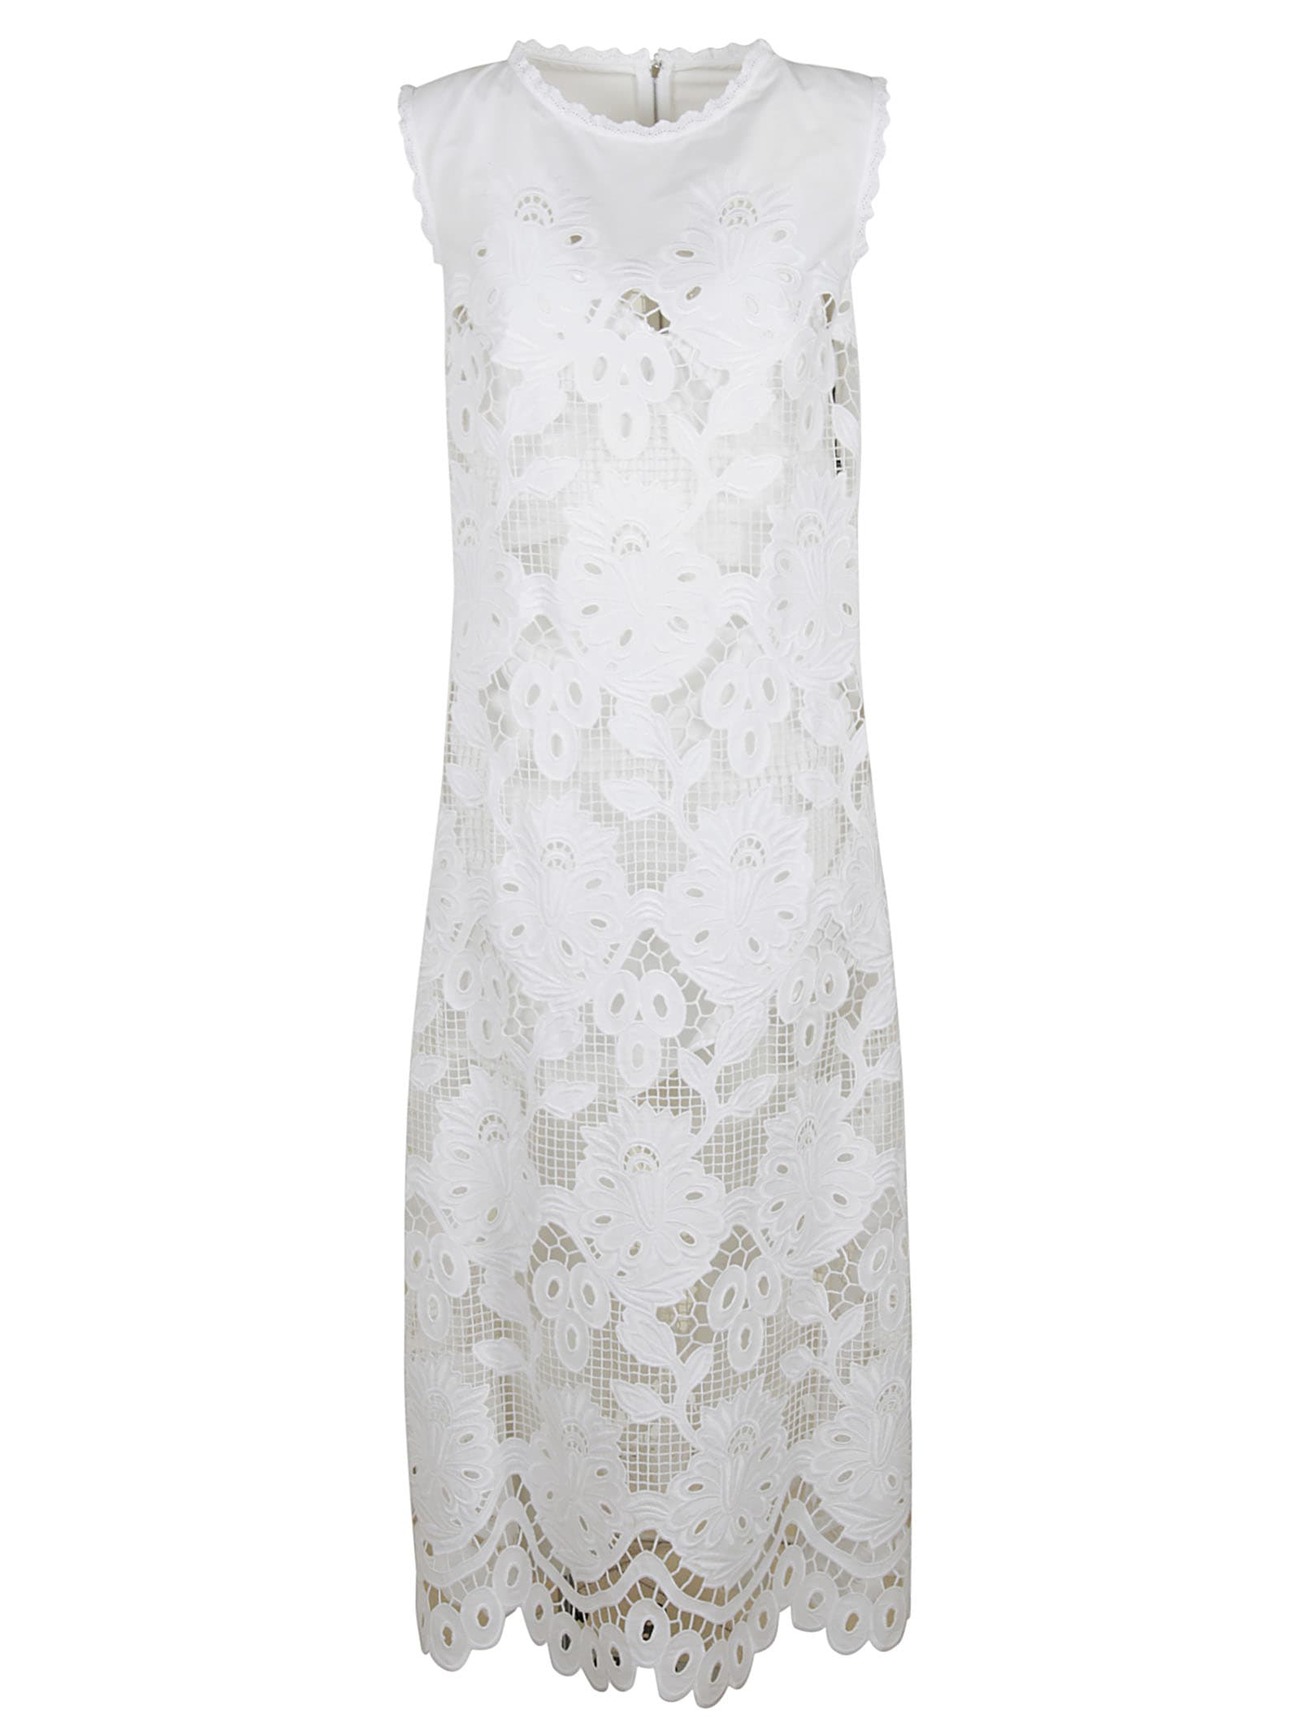 Dolce & Gabbana Lace Sleeveless Dress in white